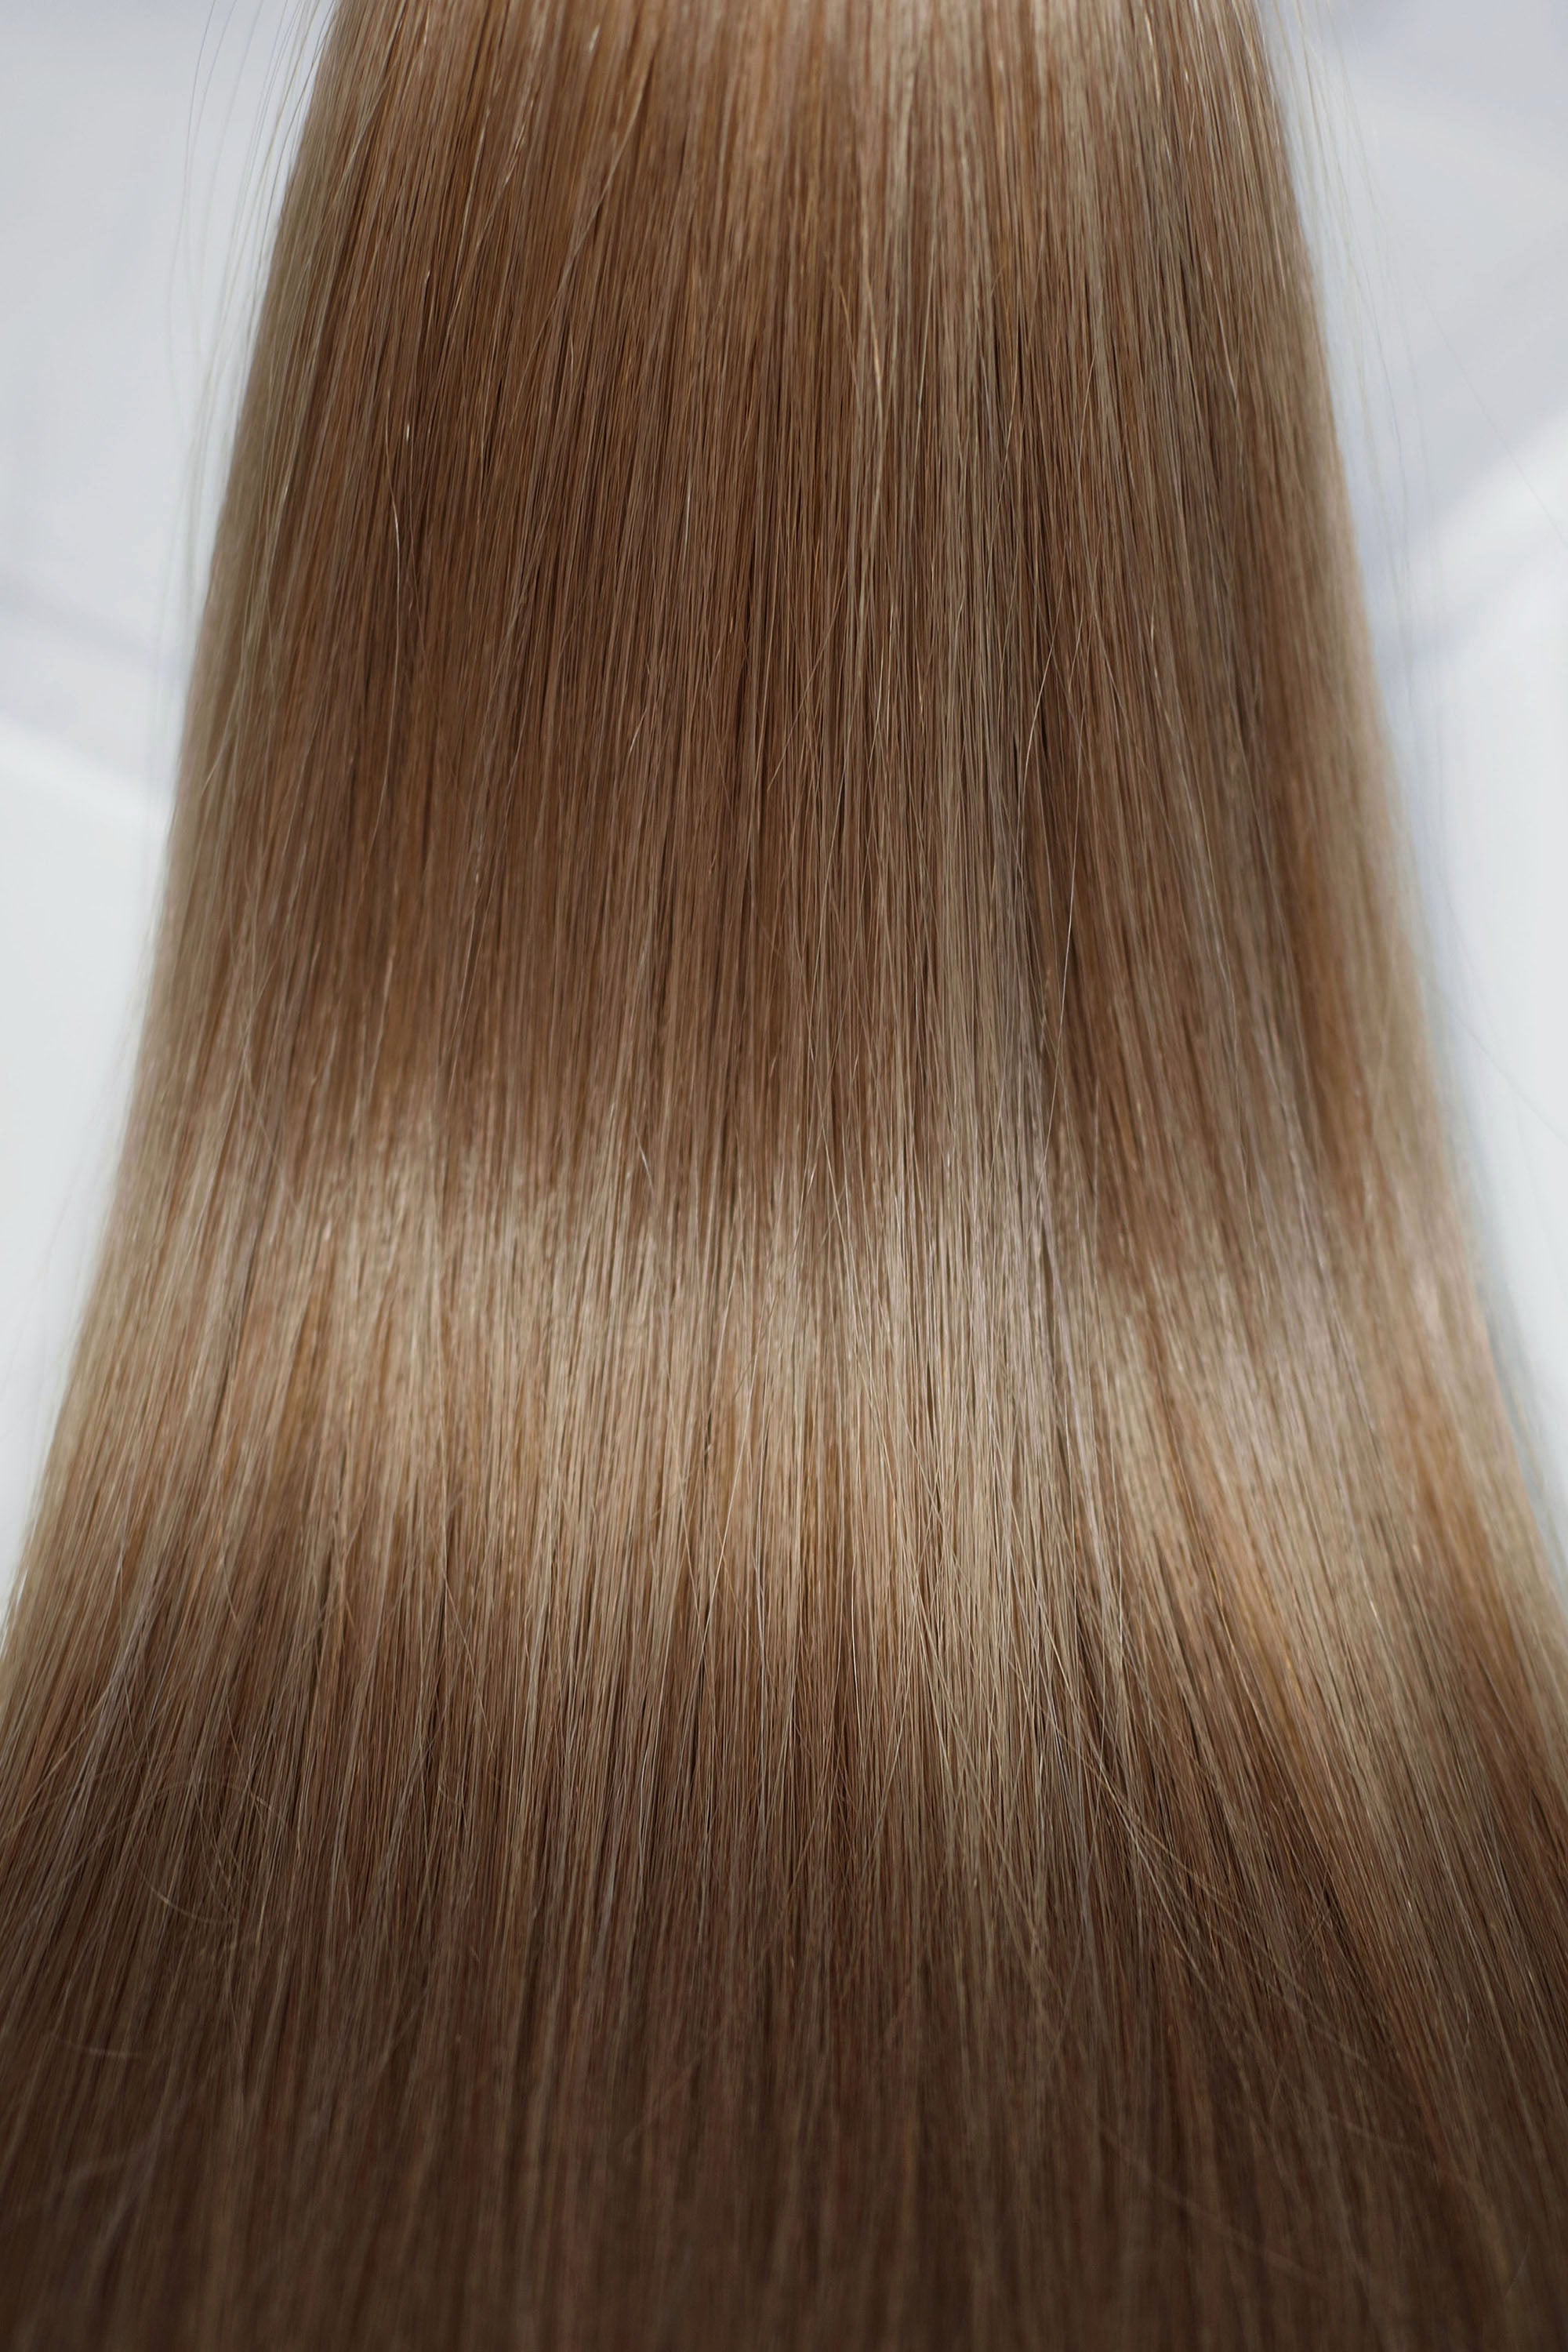 Behair professional Keratin Tip "Premium" 16" (40cm) Natural Straight Light Ash Brown #10 - 25g (Standart - 0.7g each pcs) hair extensions